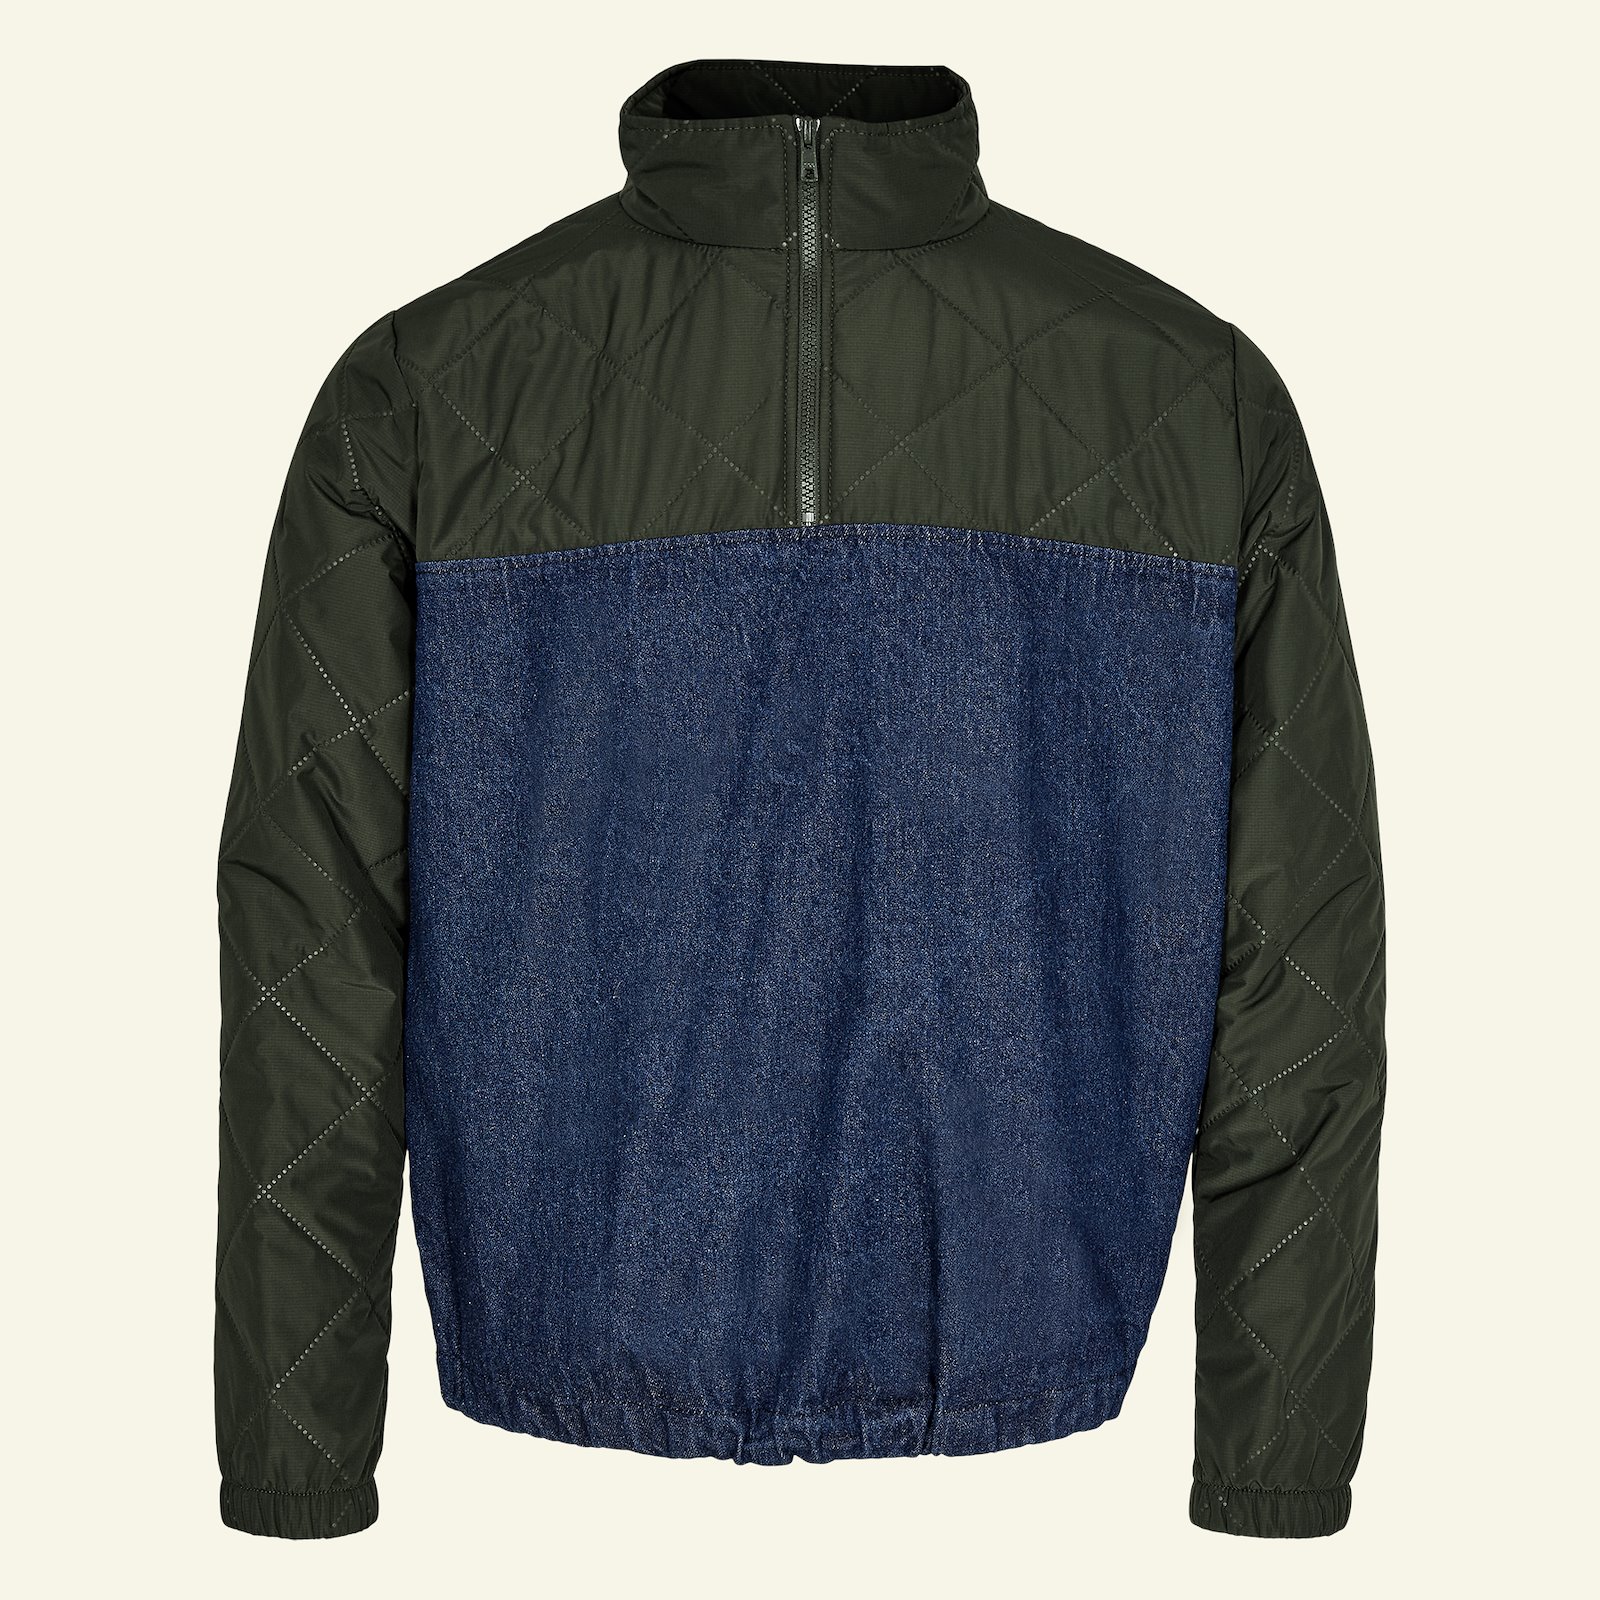 Sweatshirt and jacket, XXL p87004_920264_400023_sskit